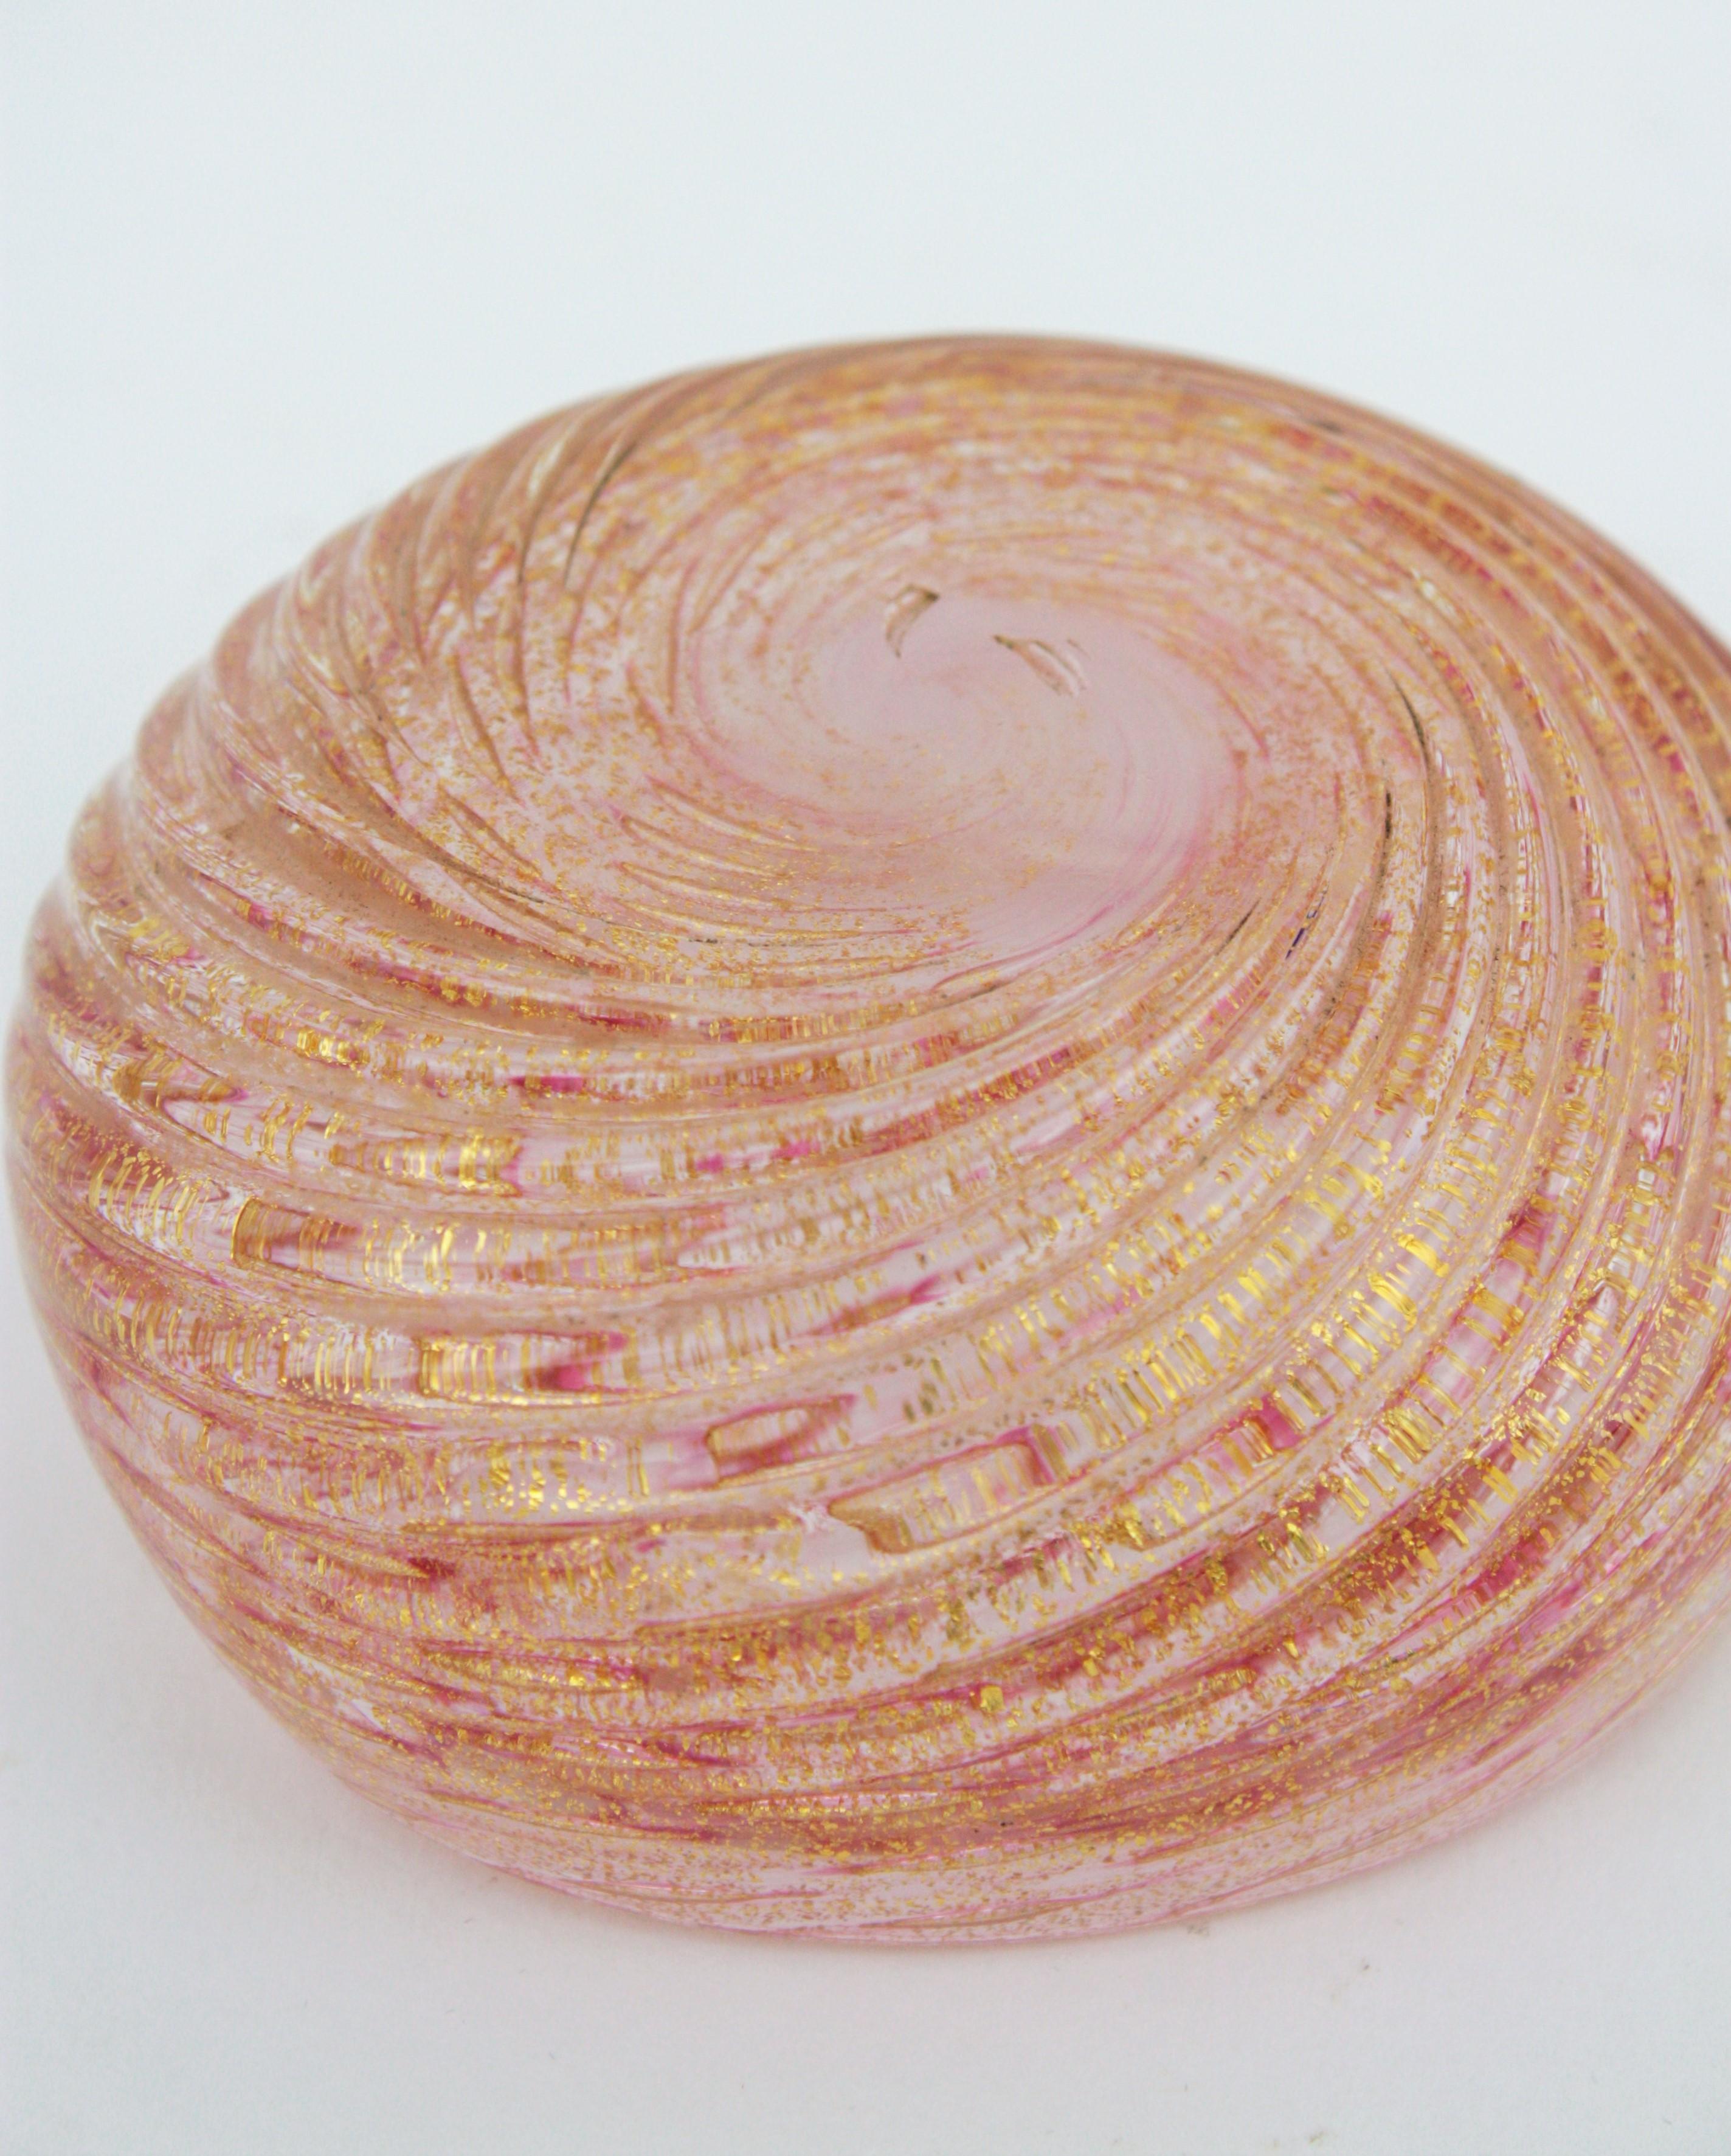 Barovier Toso Murano Pink Swirl Gold Flecks Art Glass Bowl or Ashtray  For Sale 7